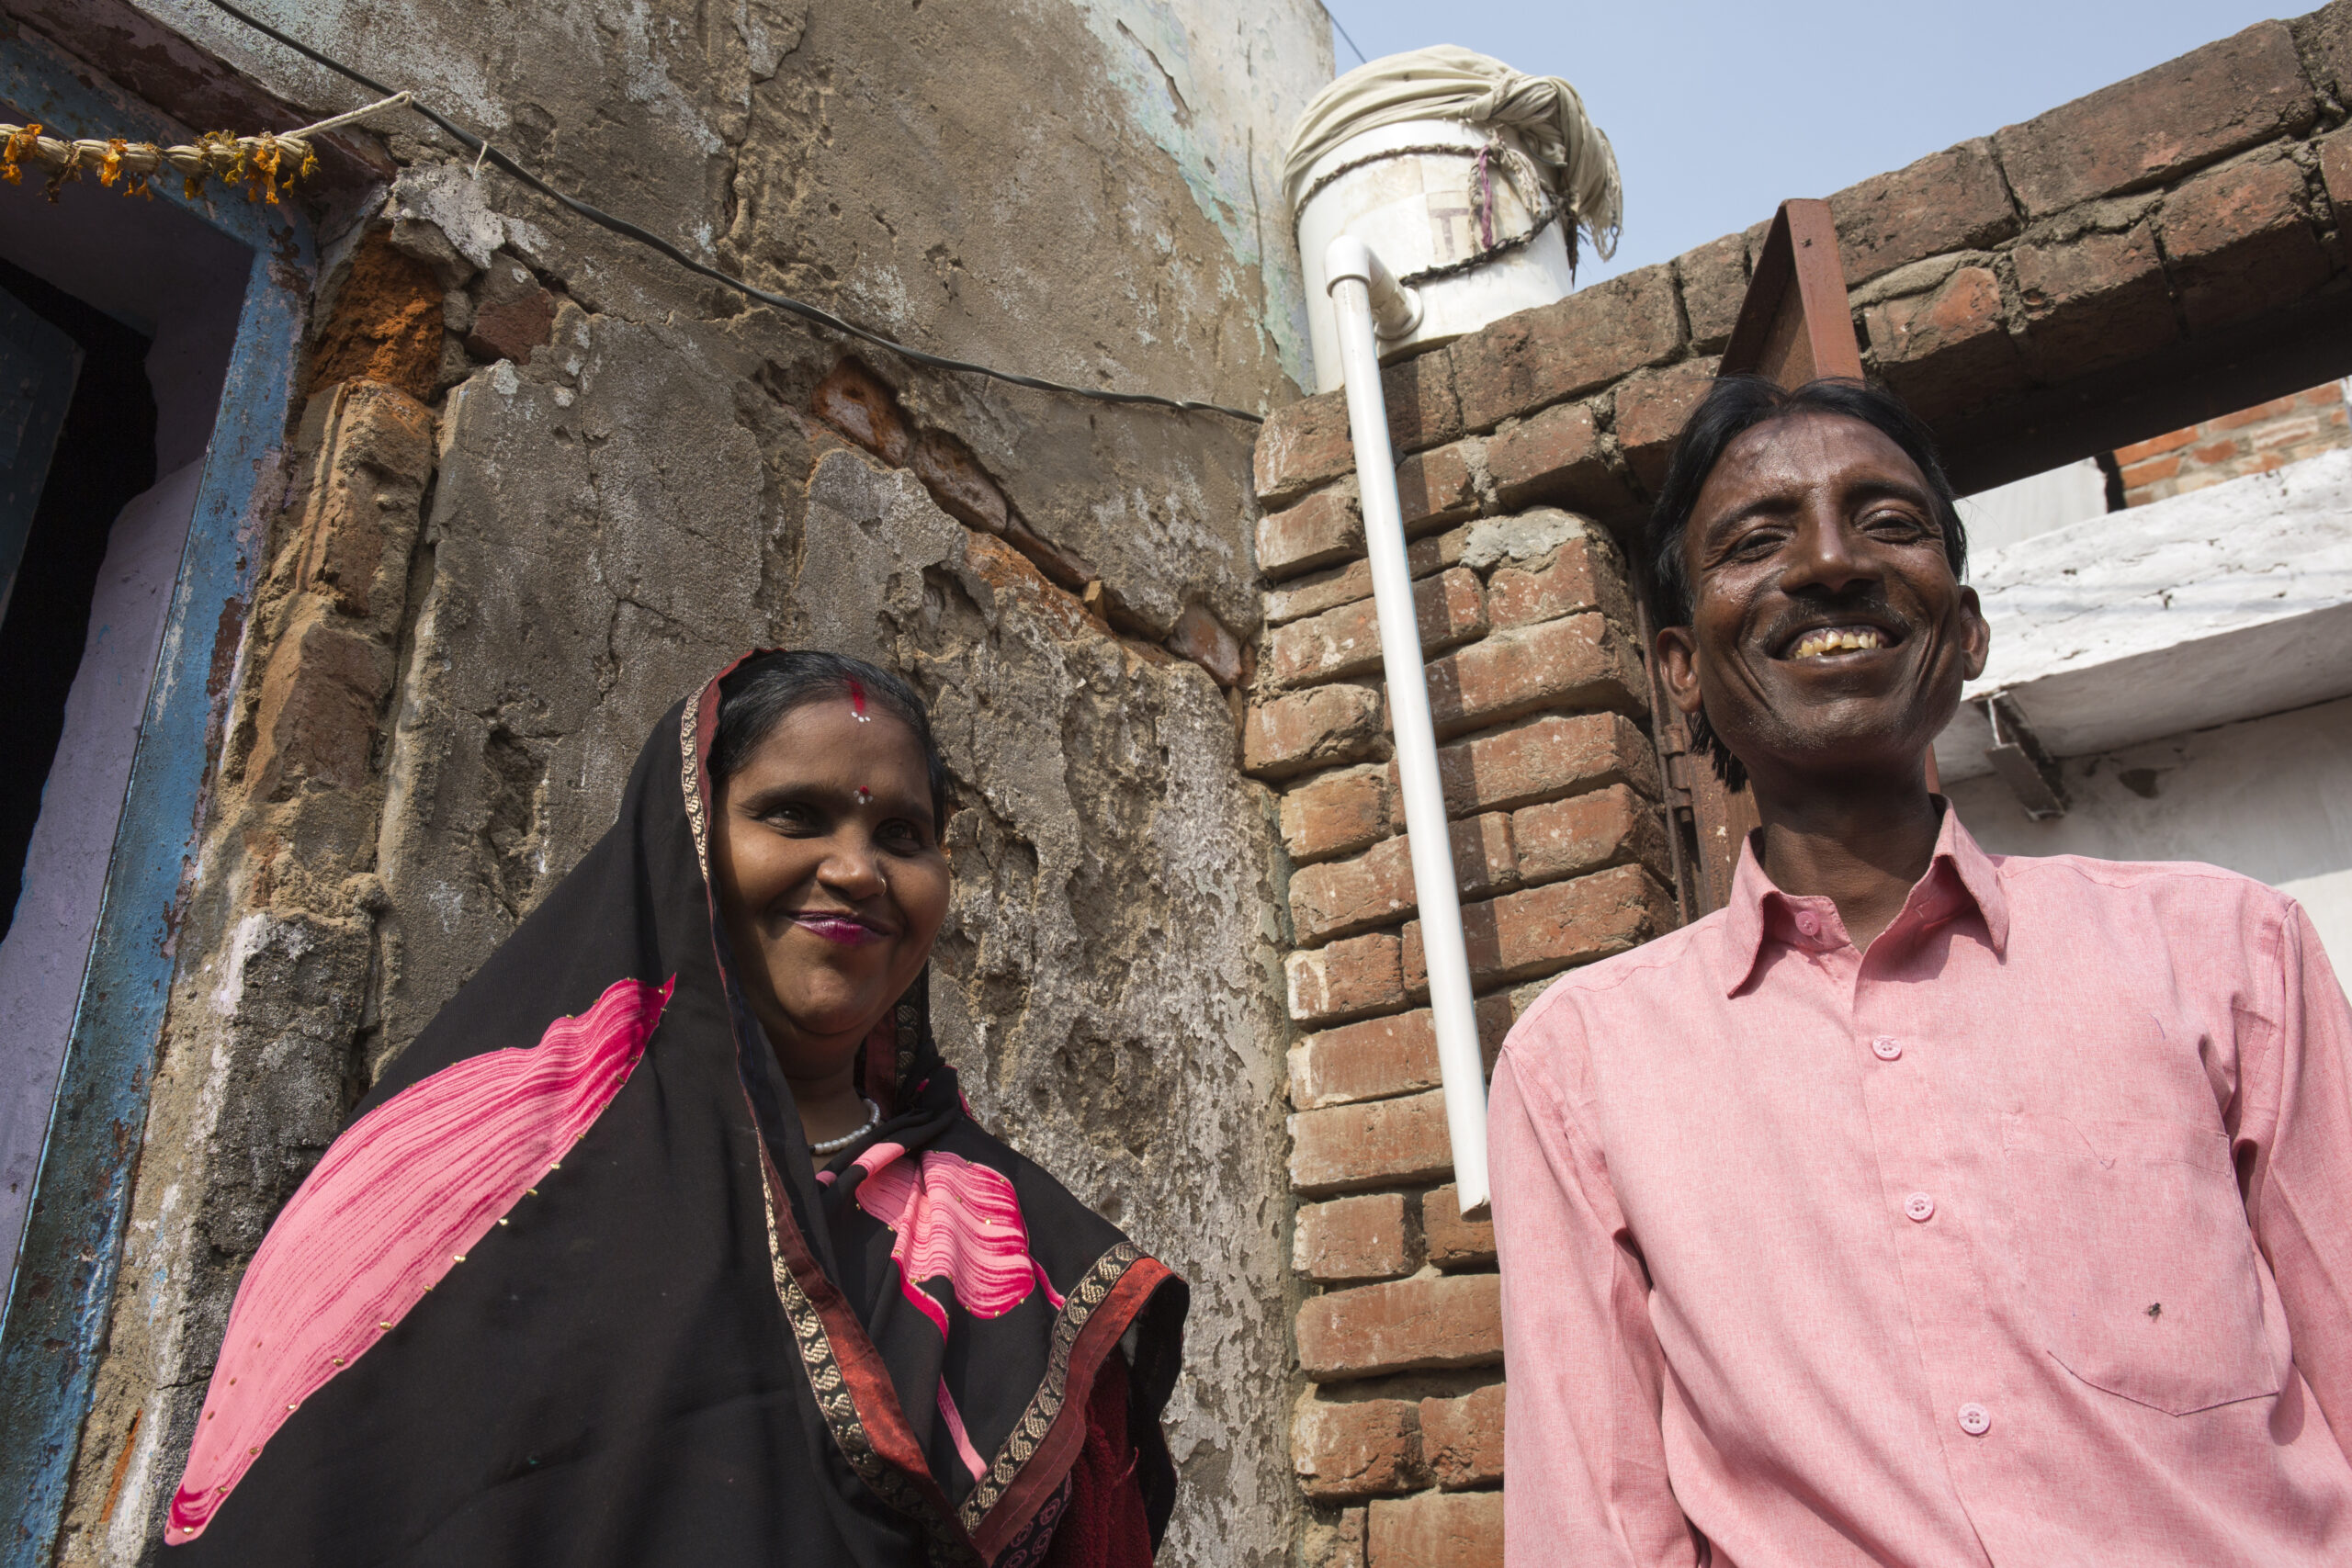 Rooftop rainwater harvesting in urban India